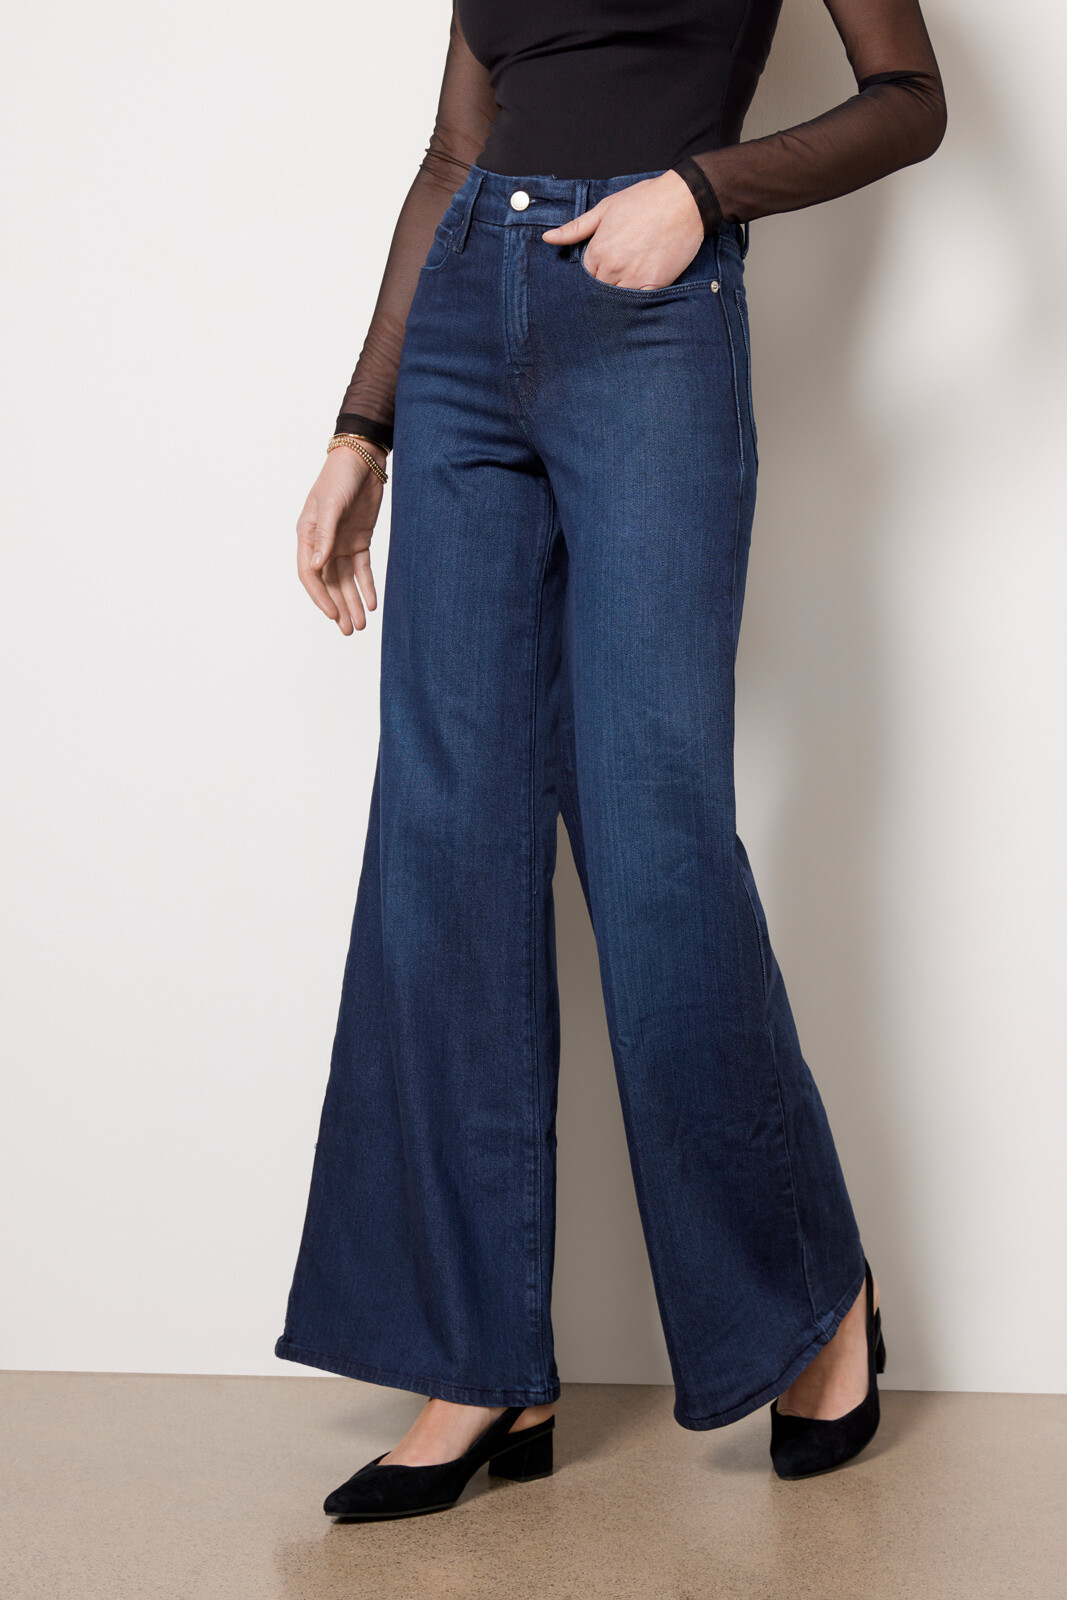 Women's denim Palazzo|Trouser|Jeans|Pant|Casual Navy Blue